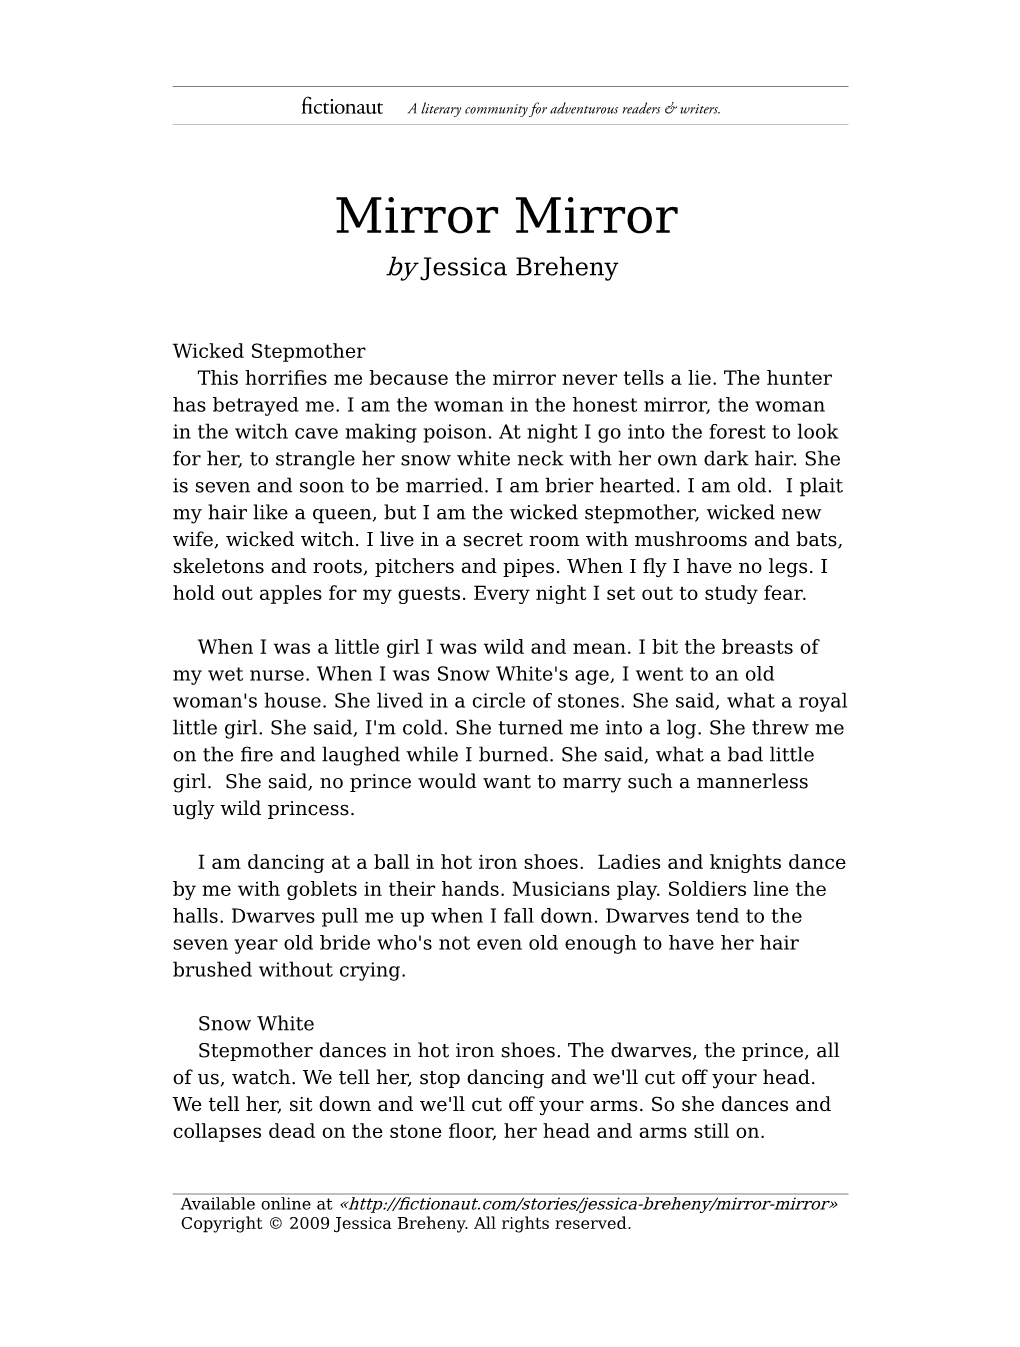 Mirror Mirror by Jessica Breheny